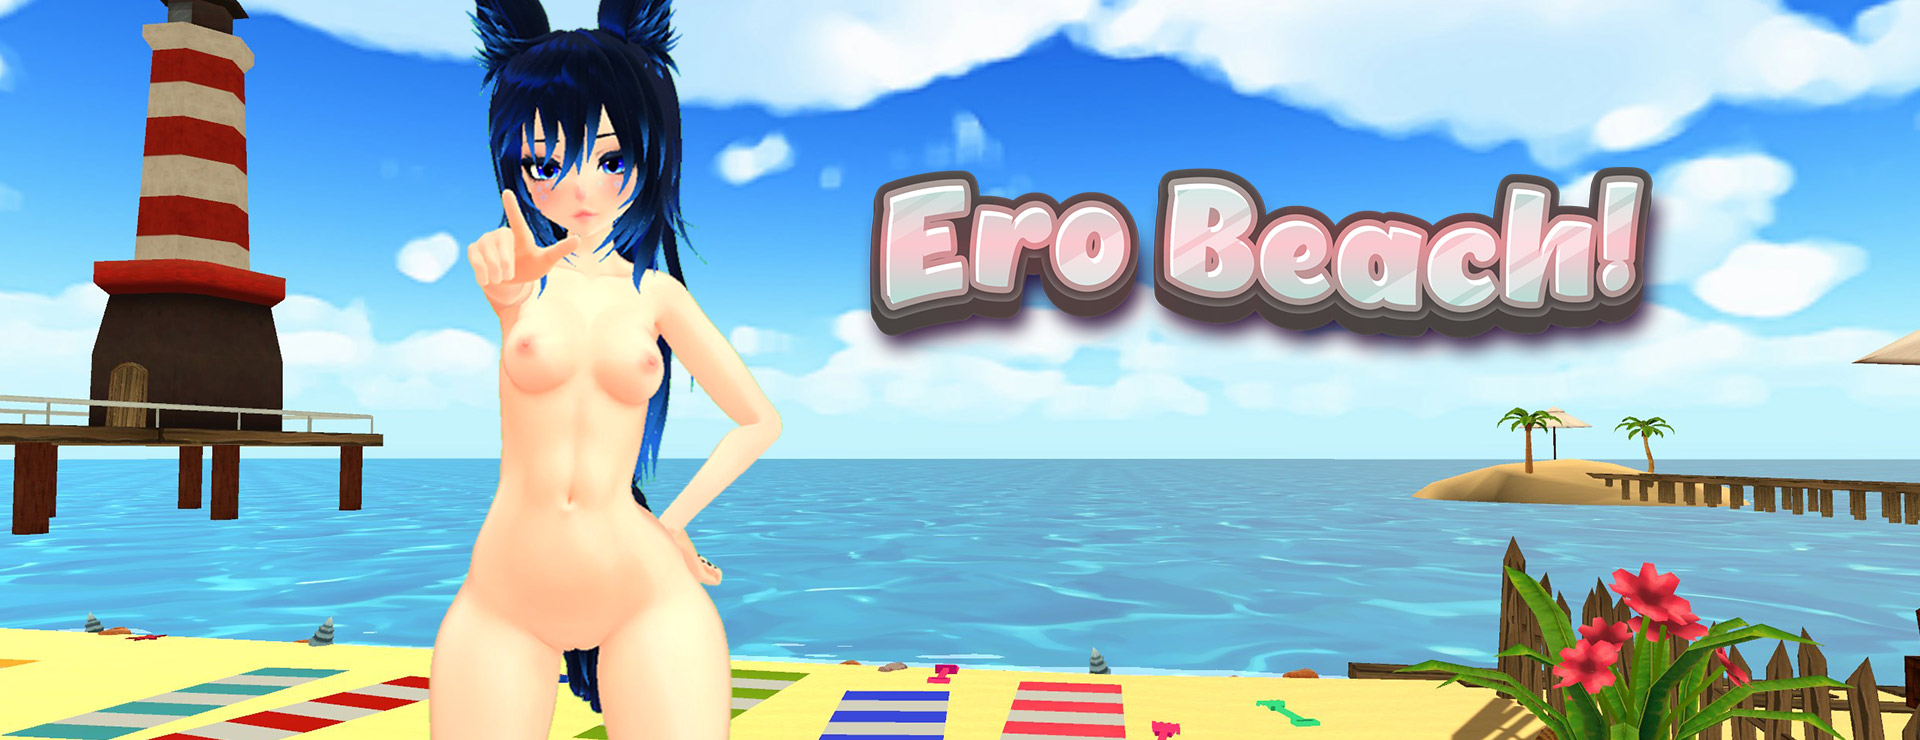 Ero Beach! - Simulation Jeu